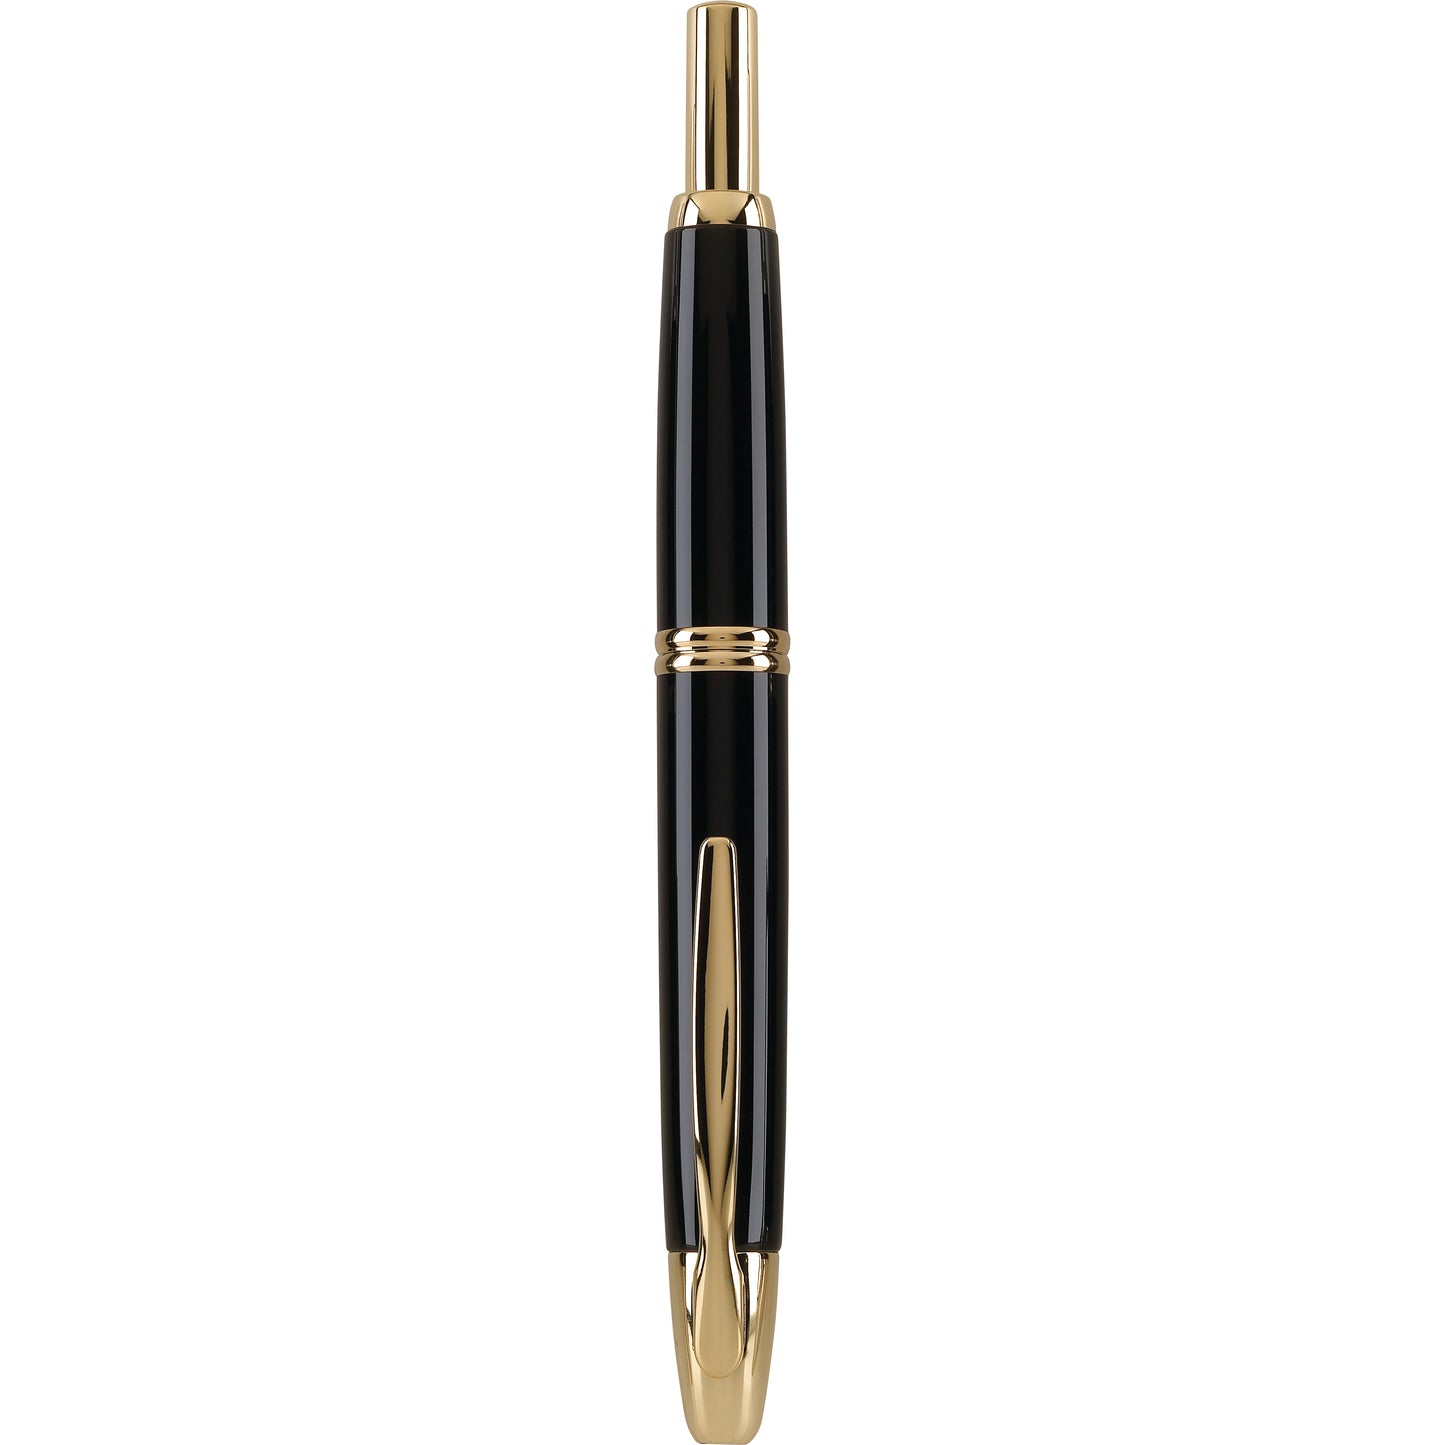 Pilot Vanishing Point Fountain Pen - Black with Gold Trim